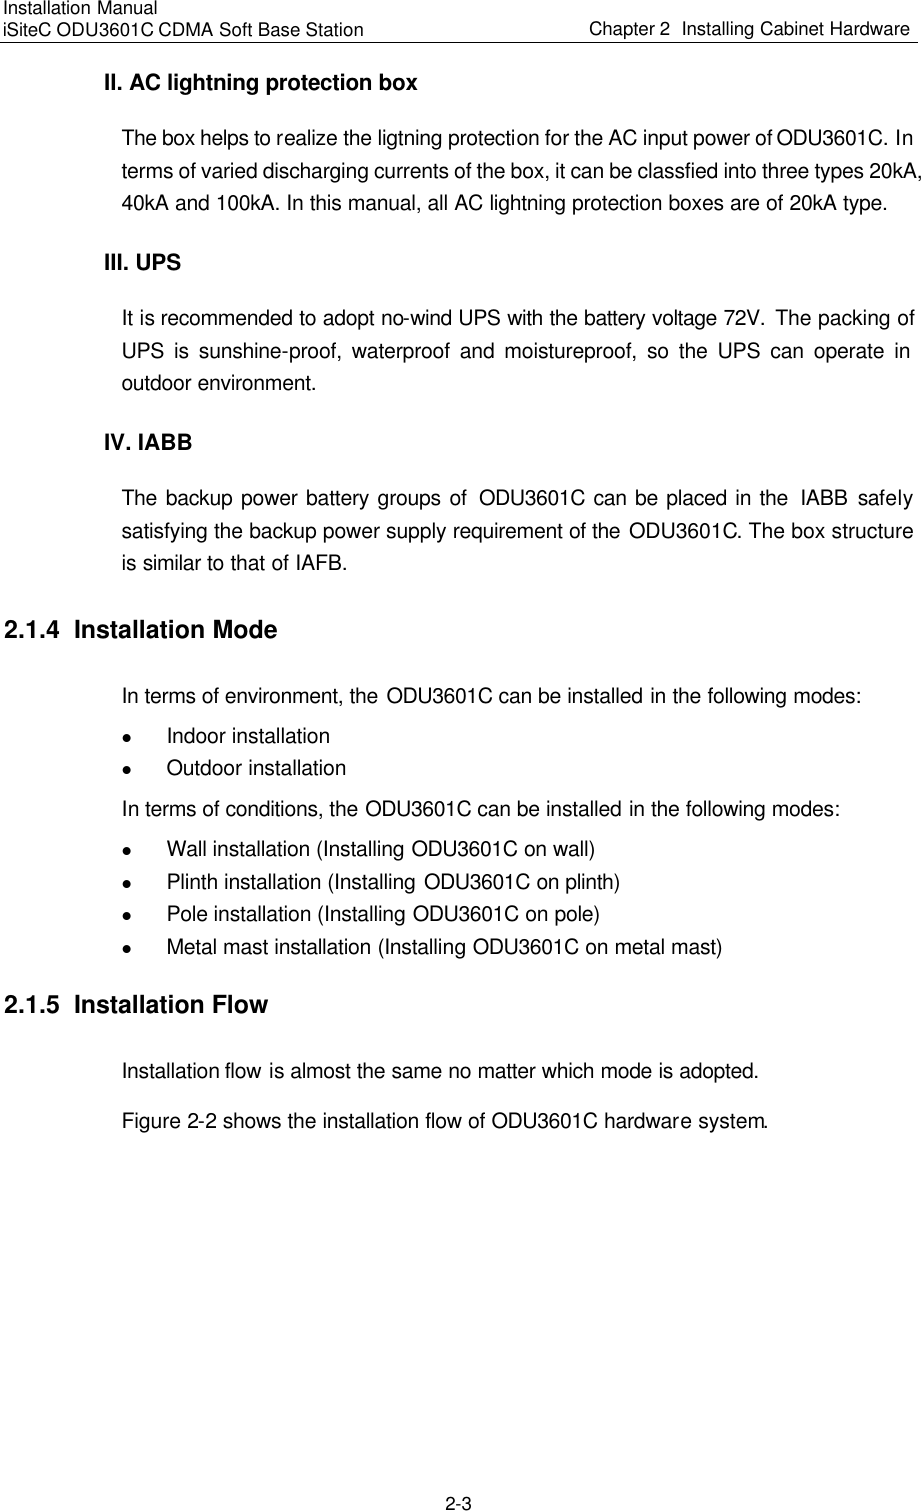 Page 45 of Huawei Technologies ODU3601C-800 CDMA Base Station User Manual 1